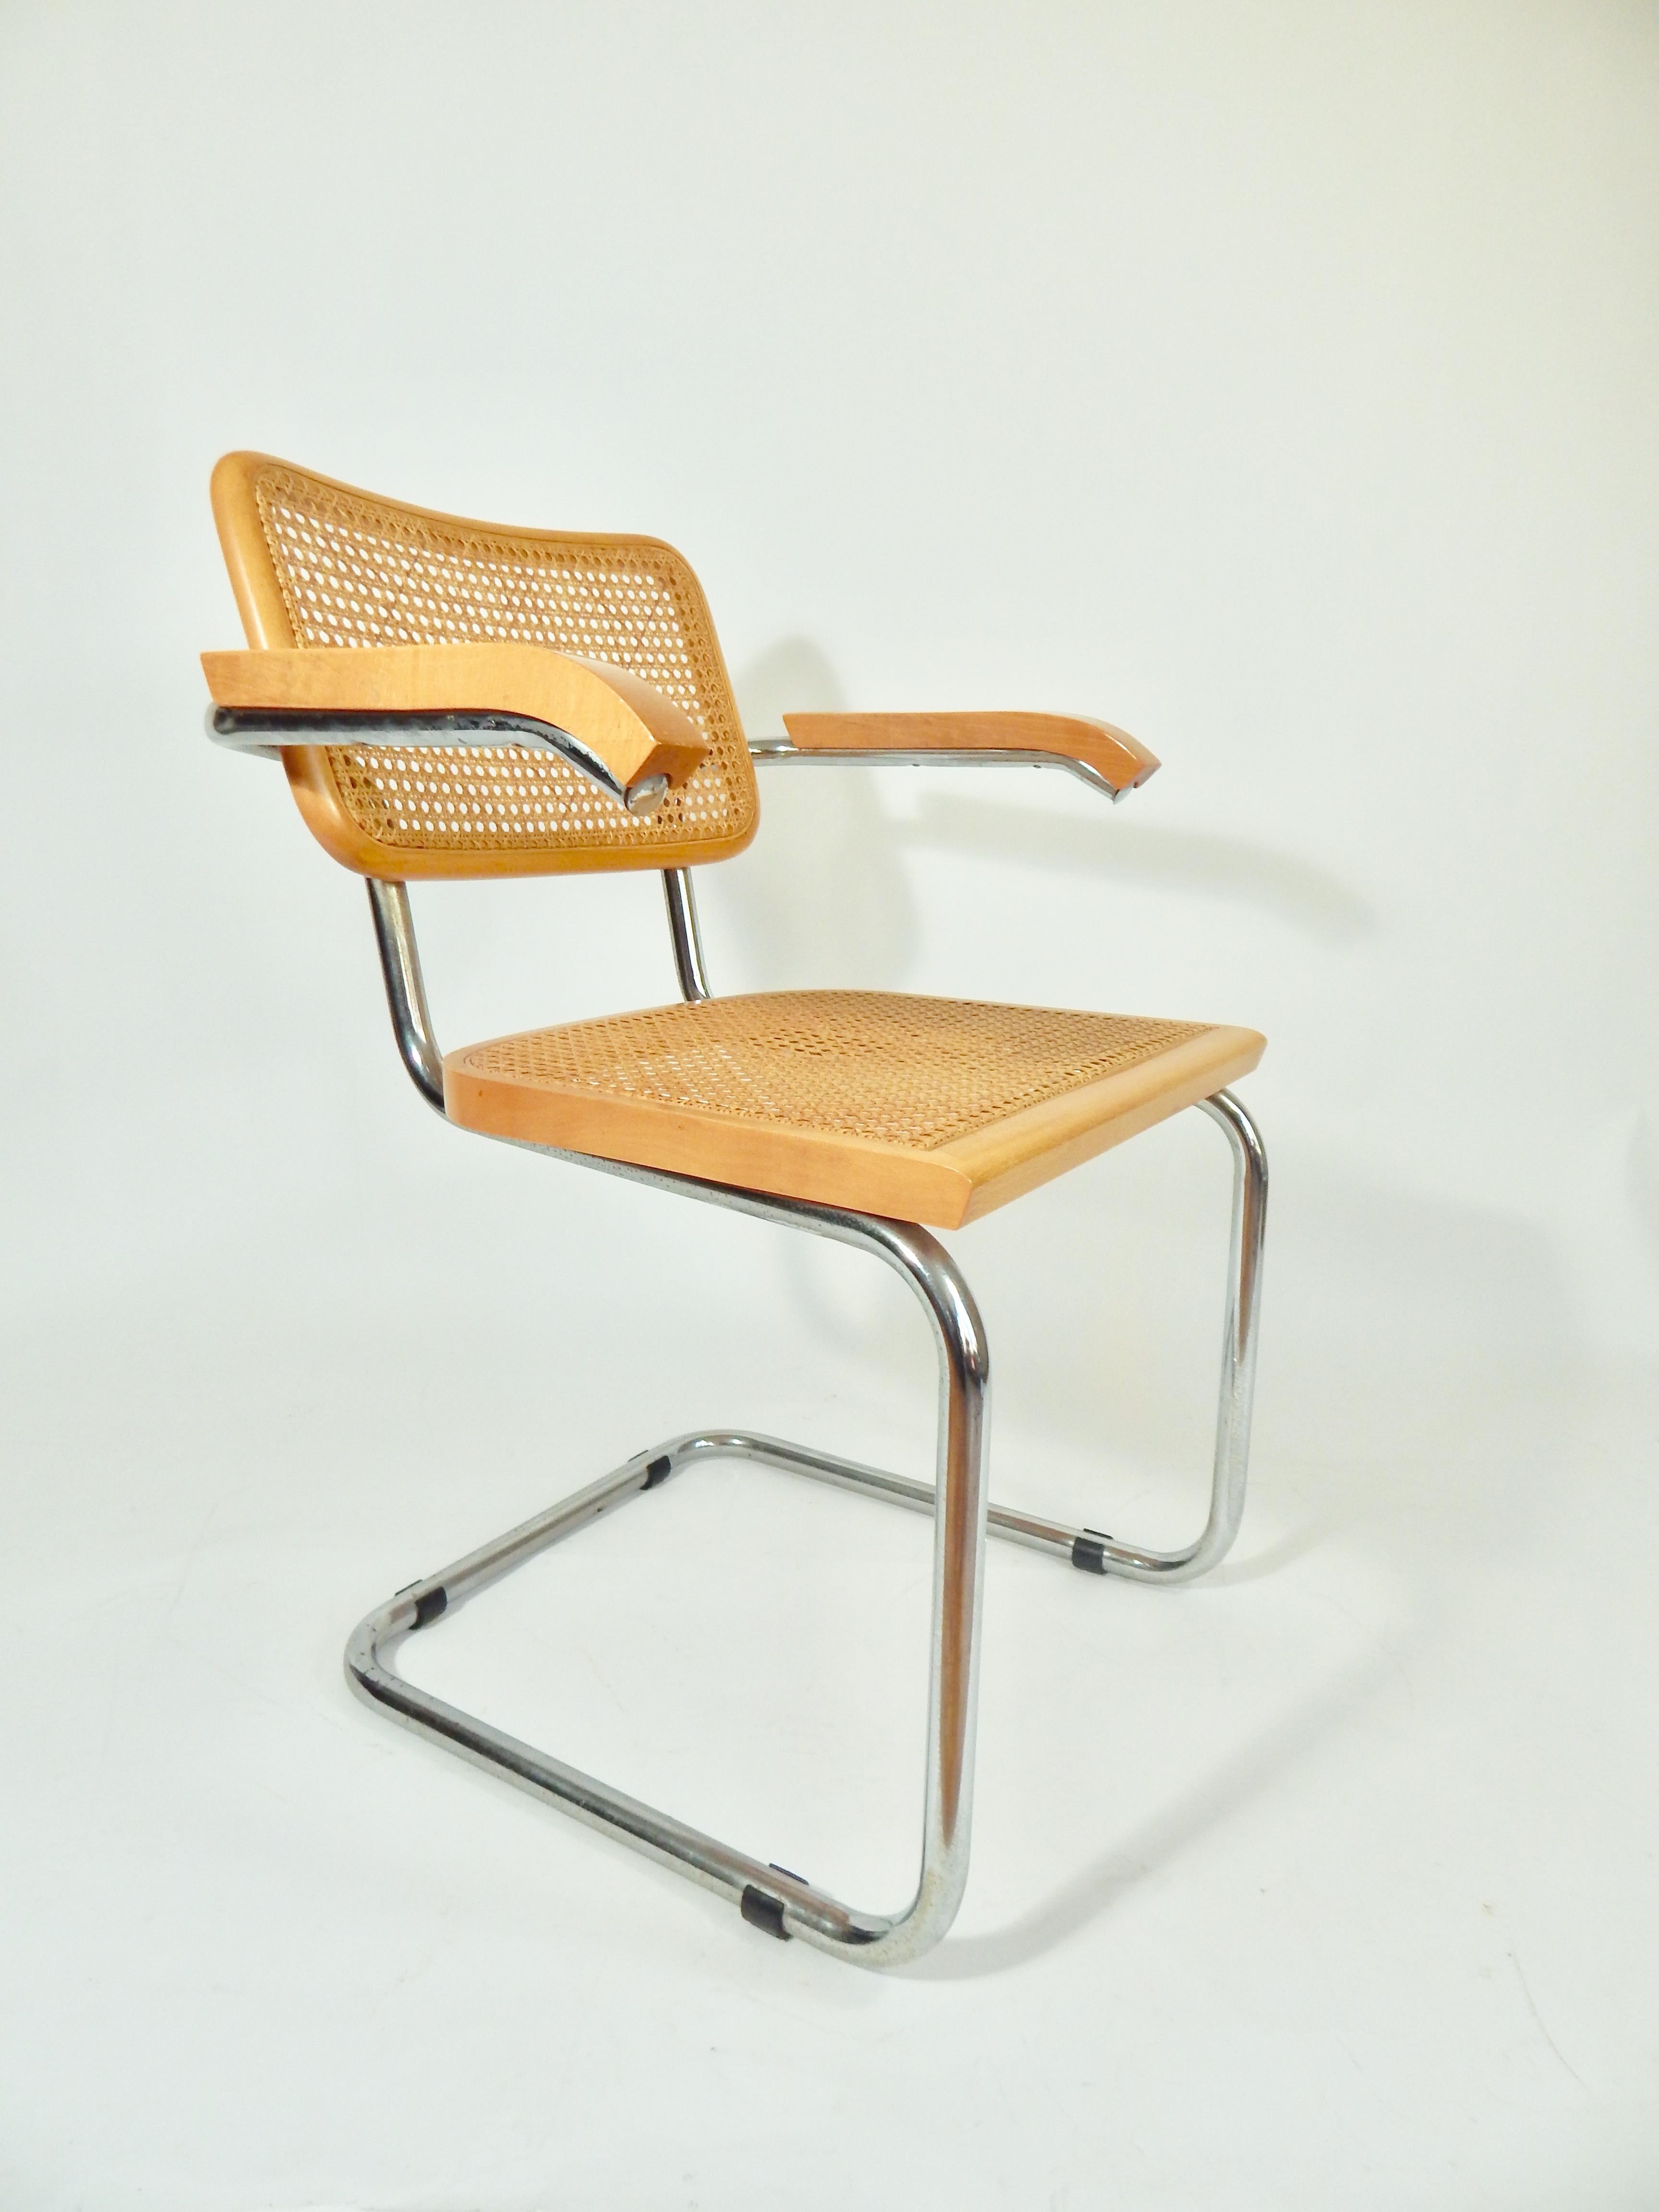 Cane Marcel Breuer Cesca Chair